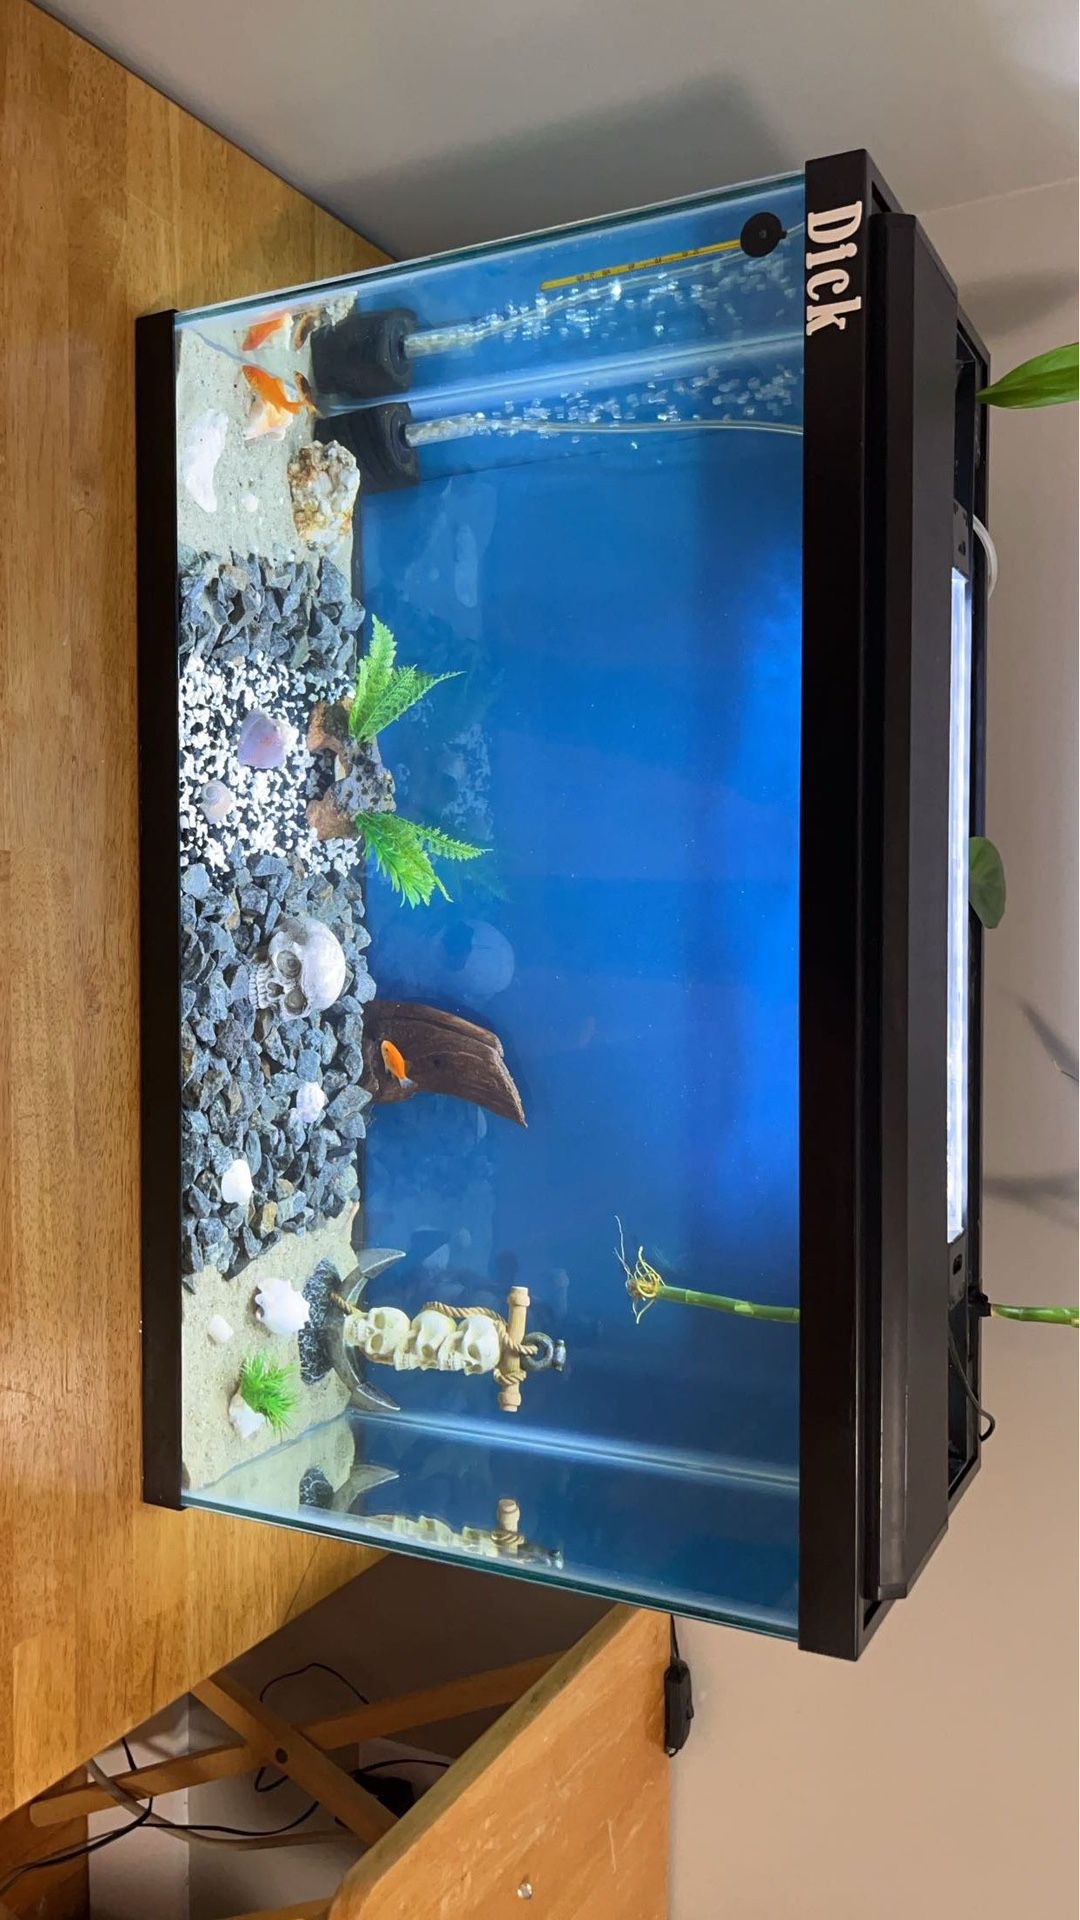 30 Gallon Fish Tank Setup With Decor, Light, And Bubbler